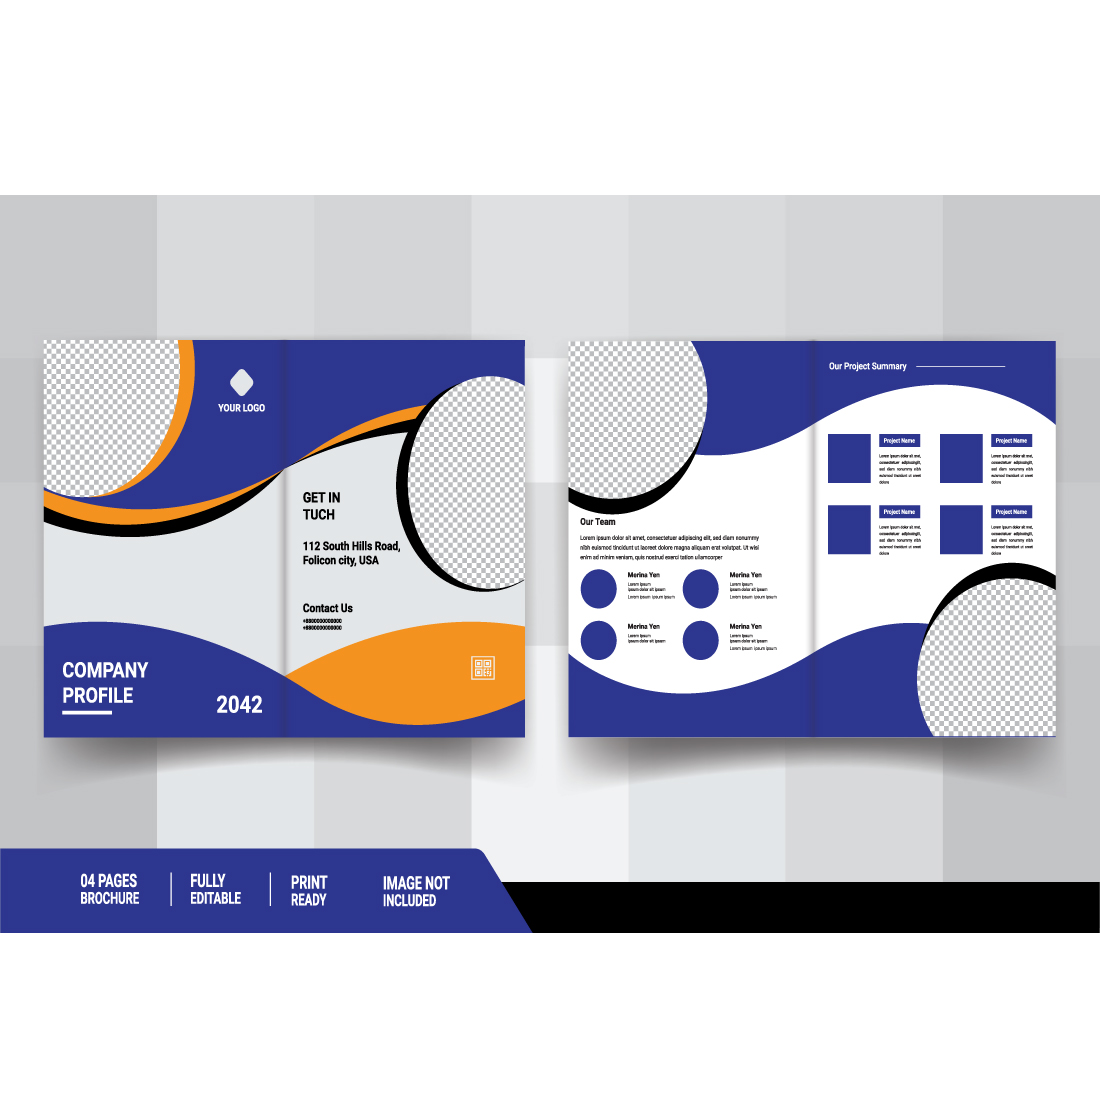 Bifold company brochure template design cover image.